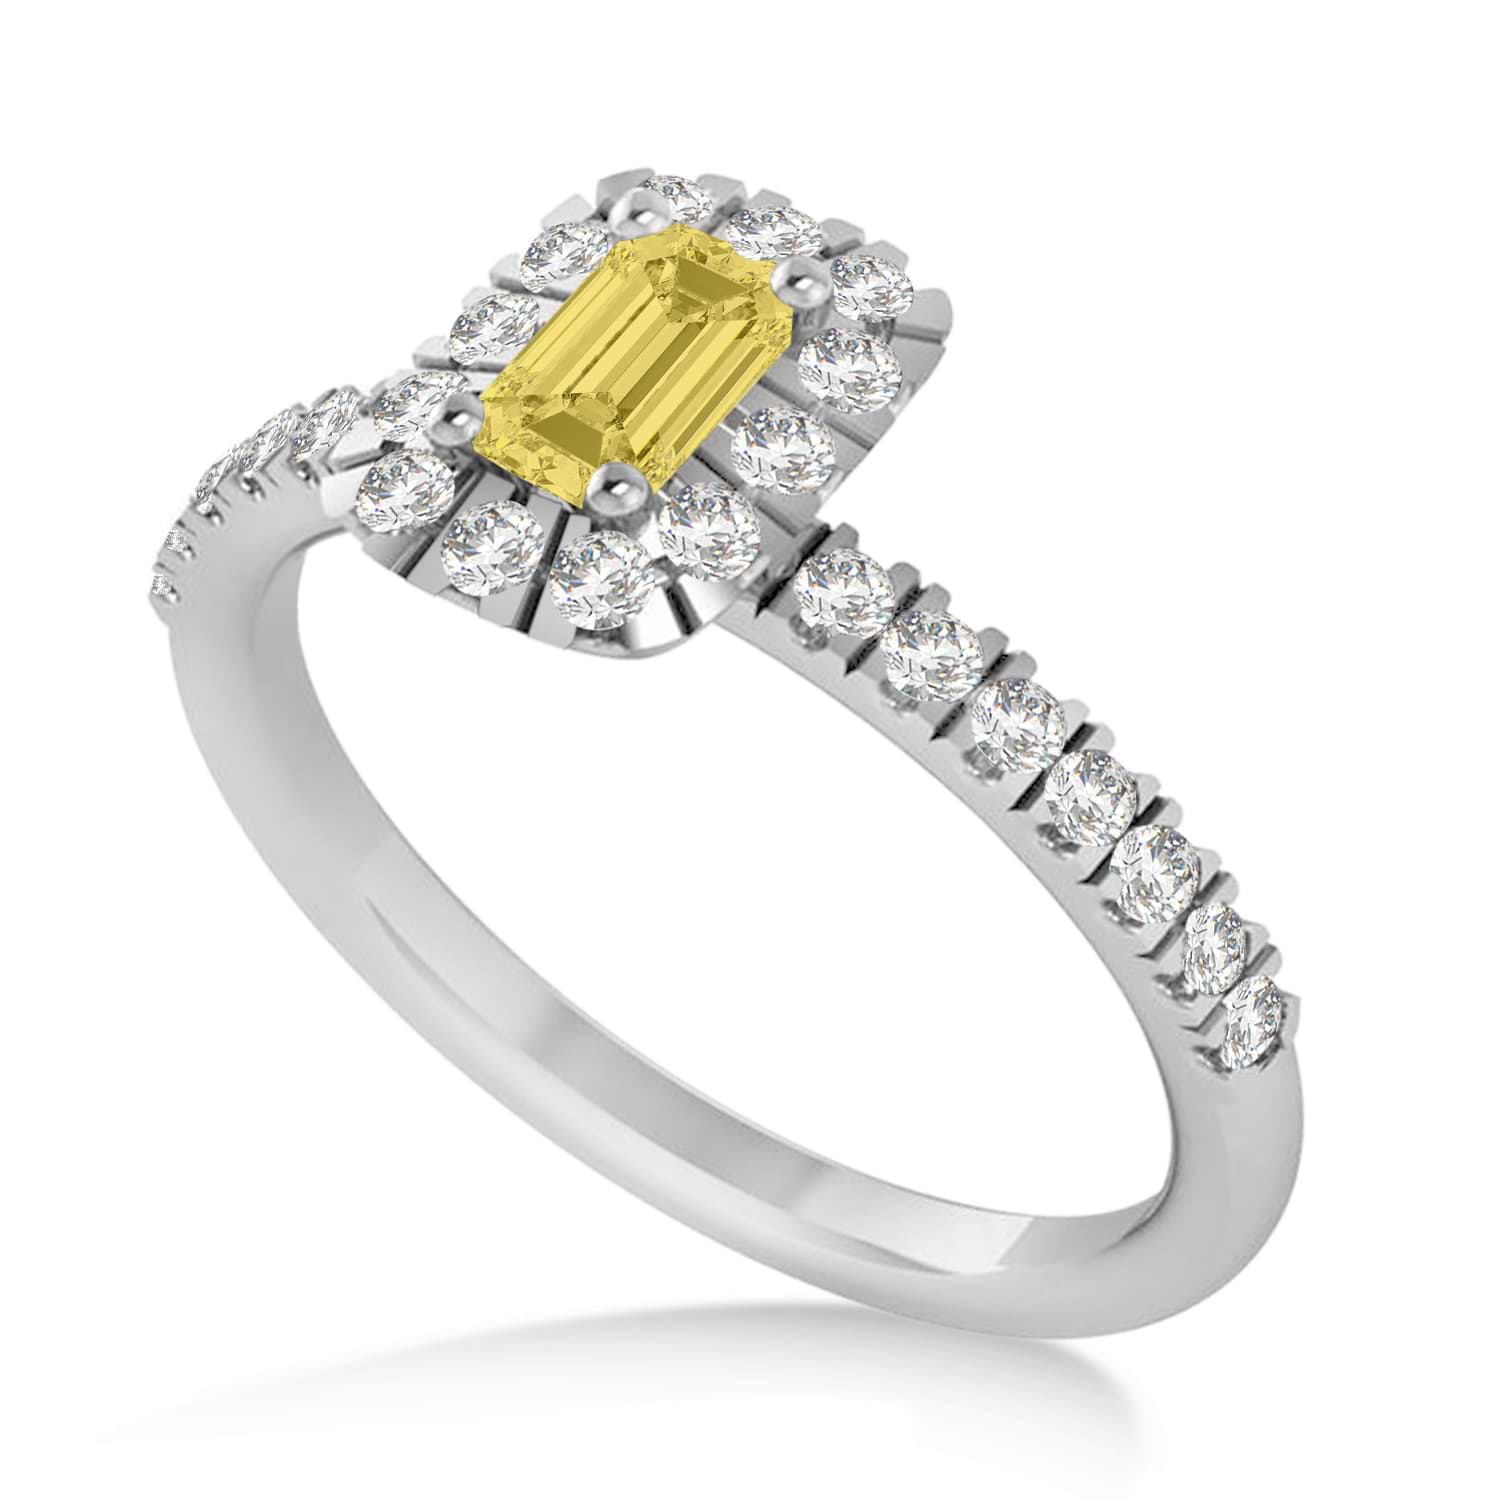 Emerald Yellow & White Diamond Halo Engagement Ring 14k White Gold (0.68ct)